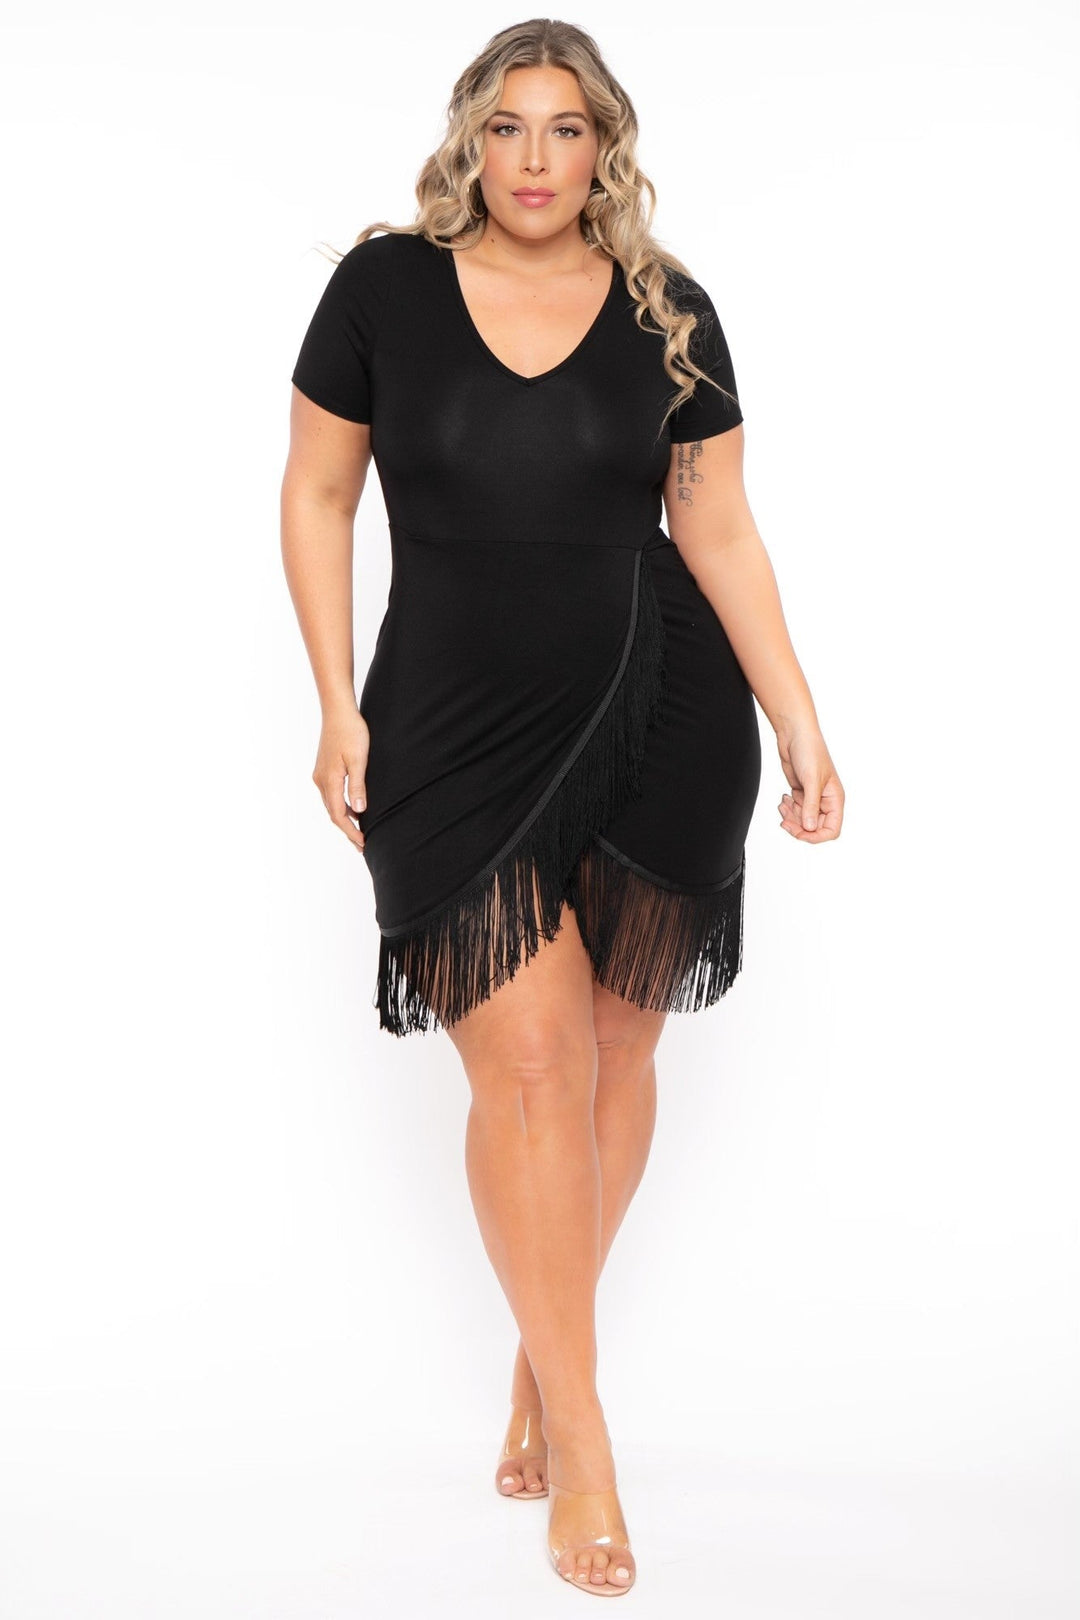 Sense - Trendy Size Little Black Dresses